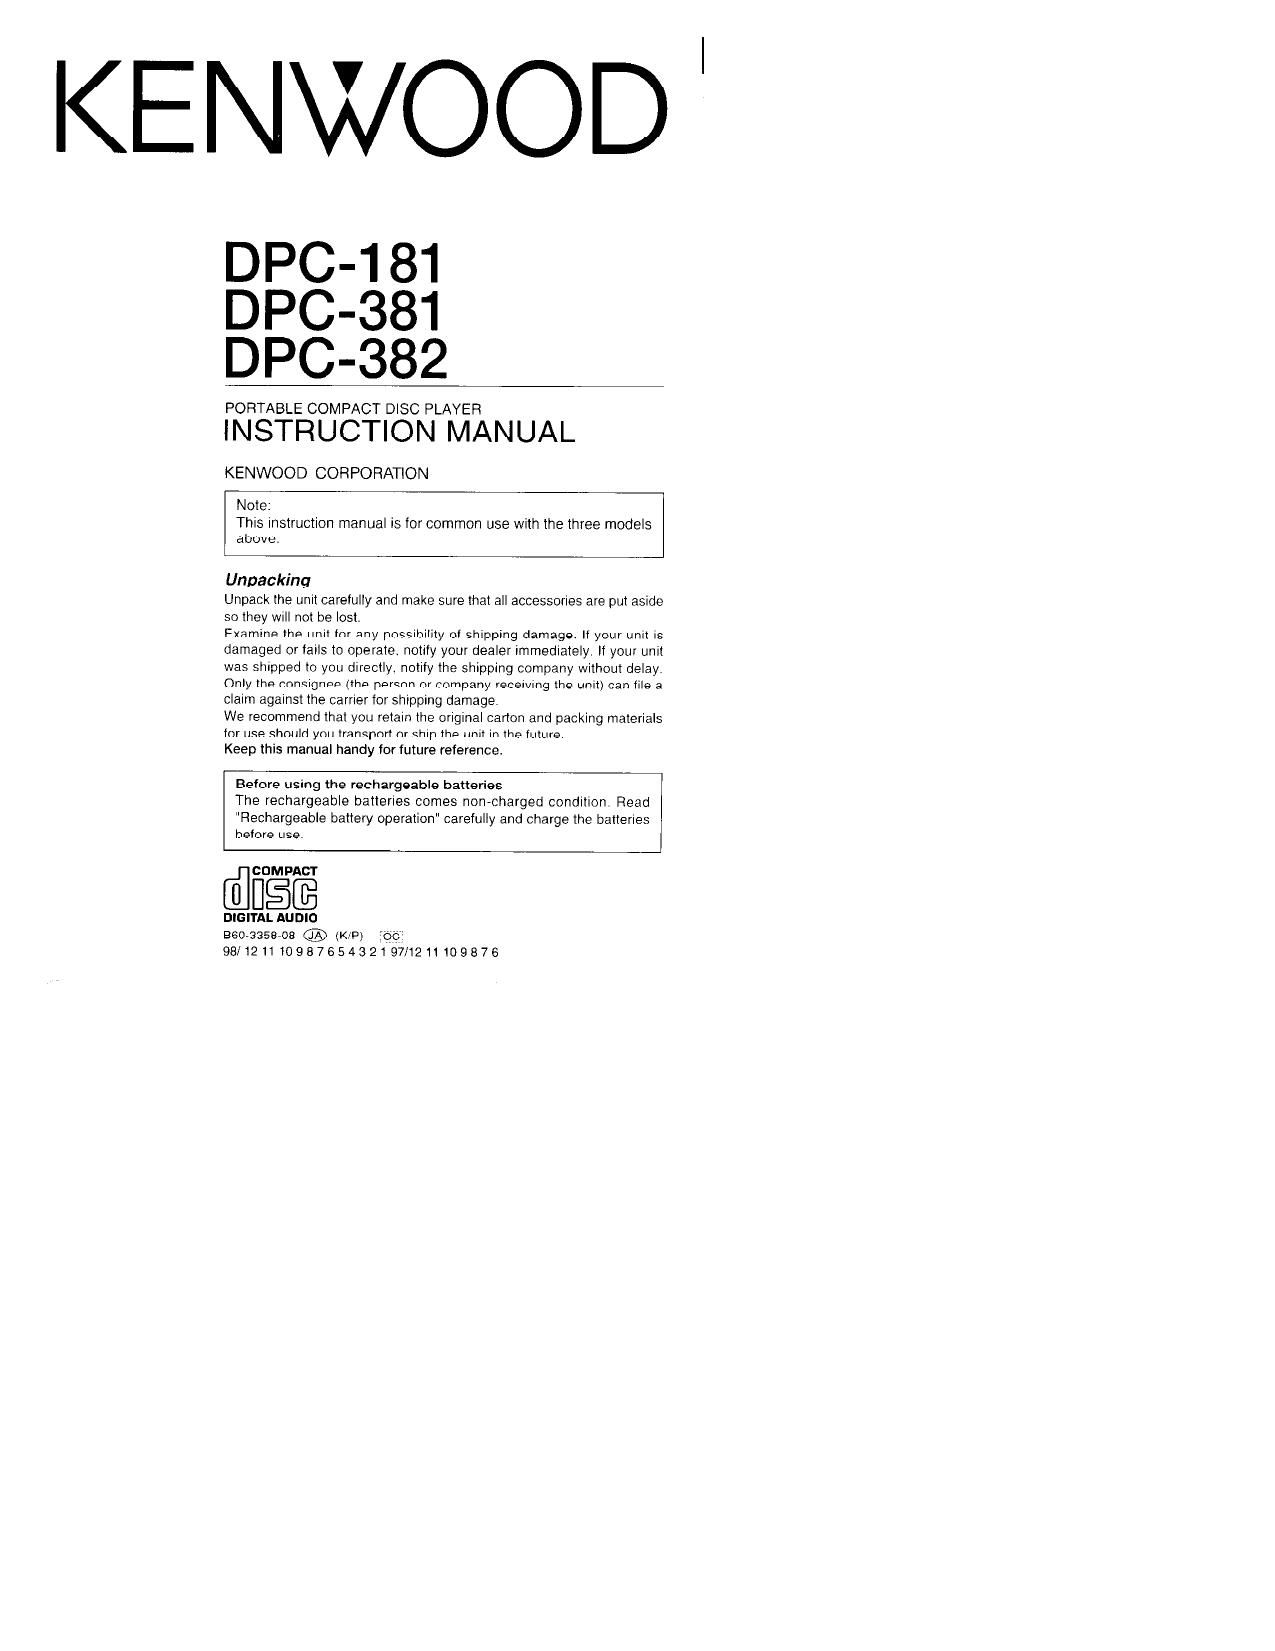 Kenwood DPC 381 Owners Manual